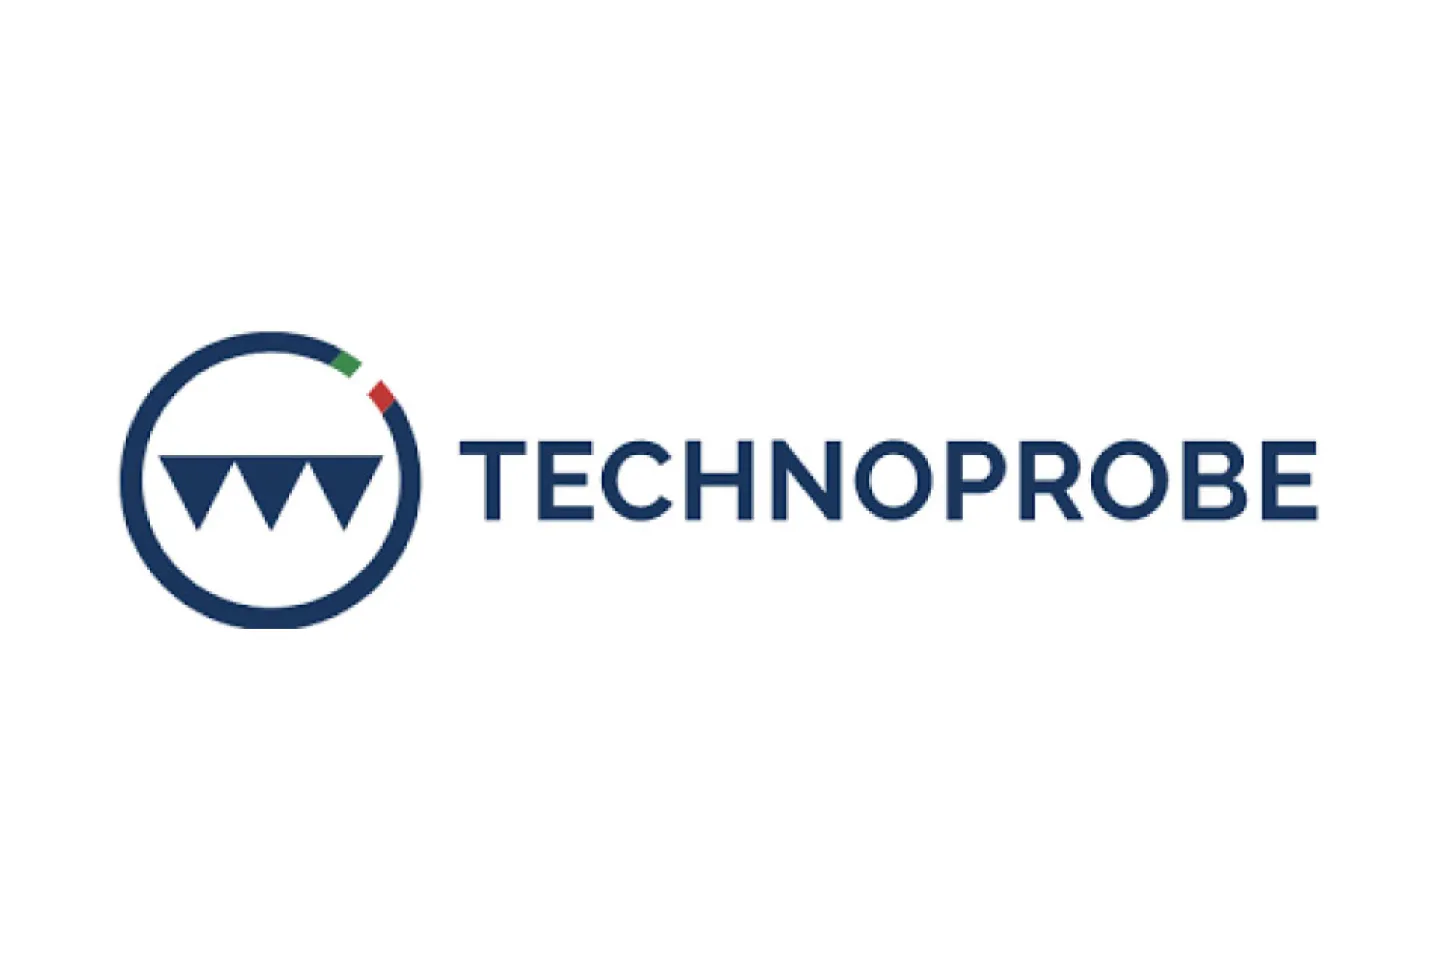 technorpobe-logo.